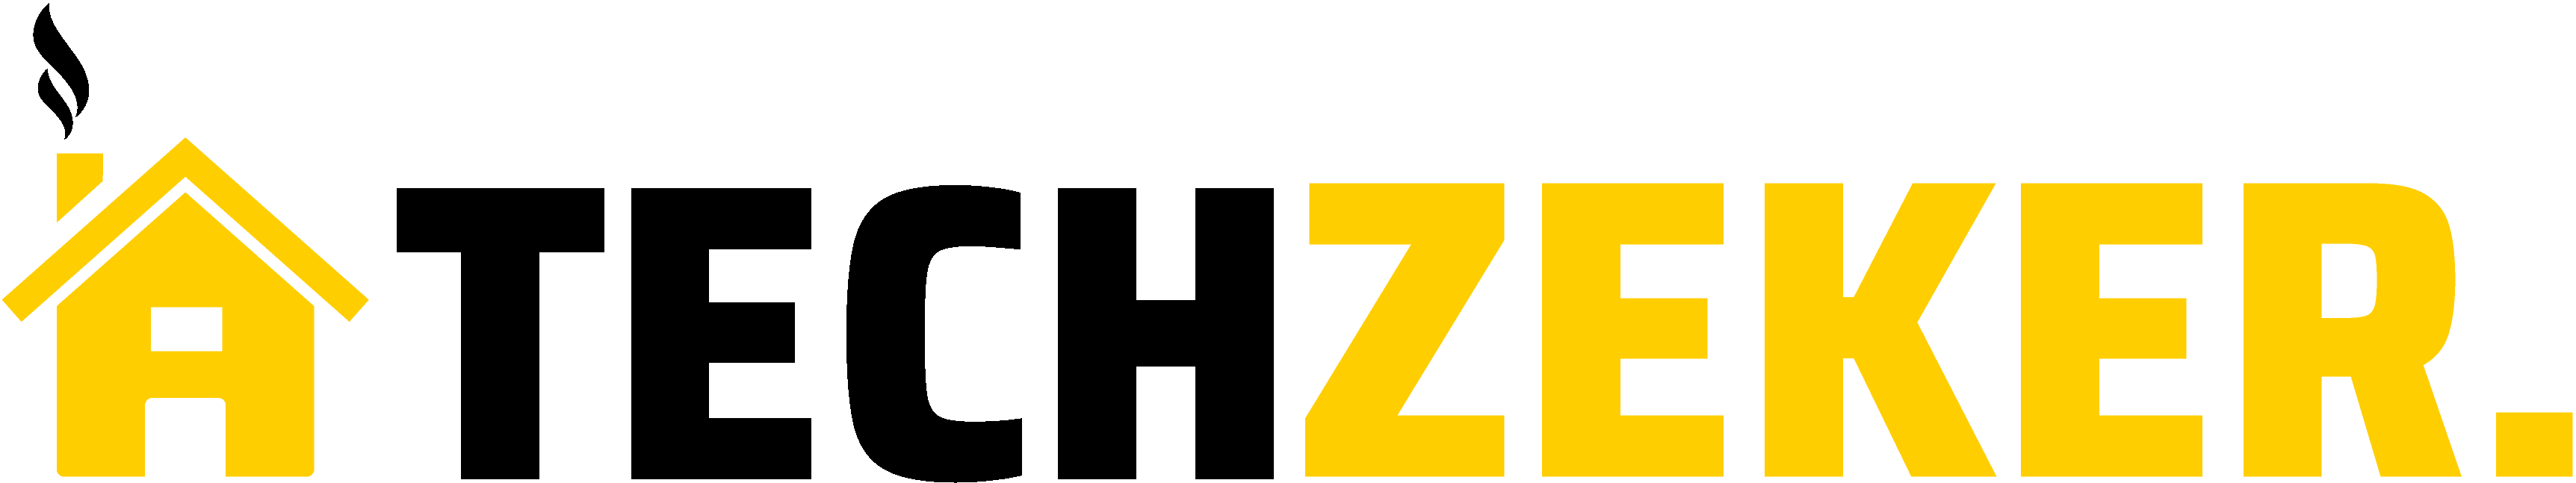 Techzeker logo